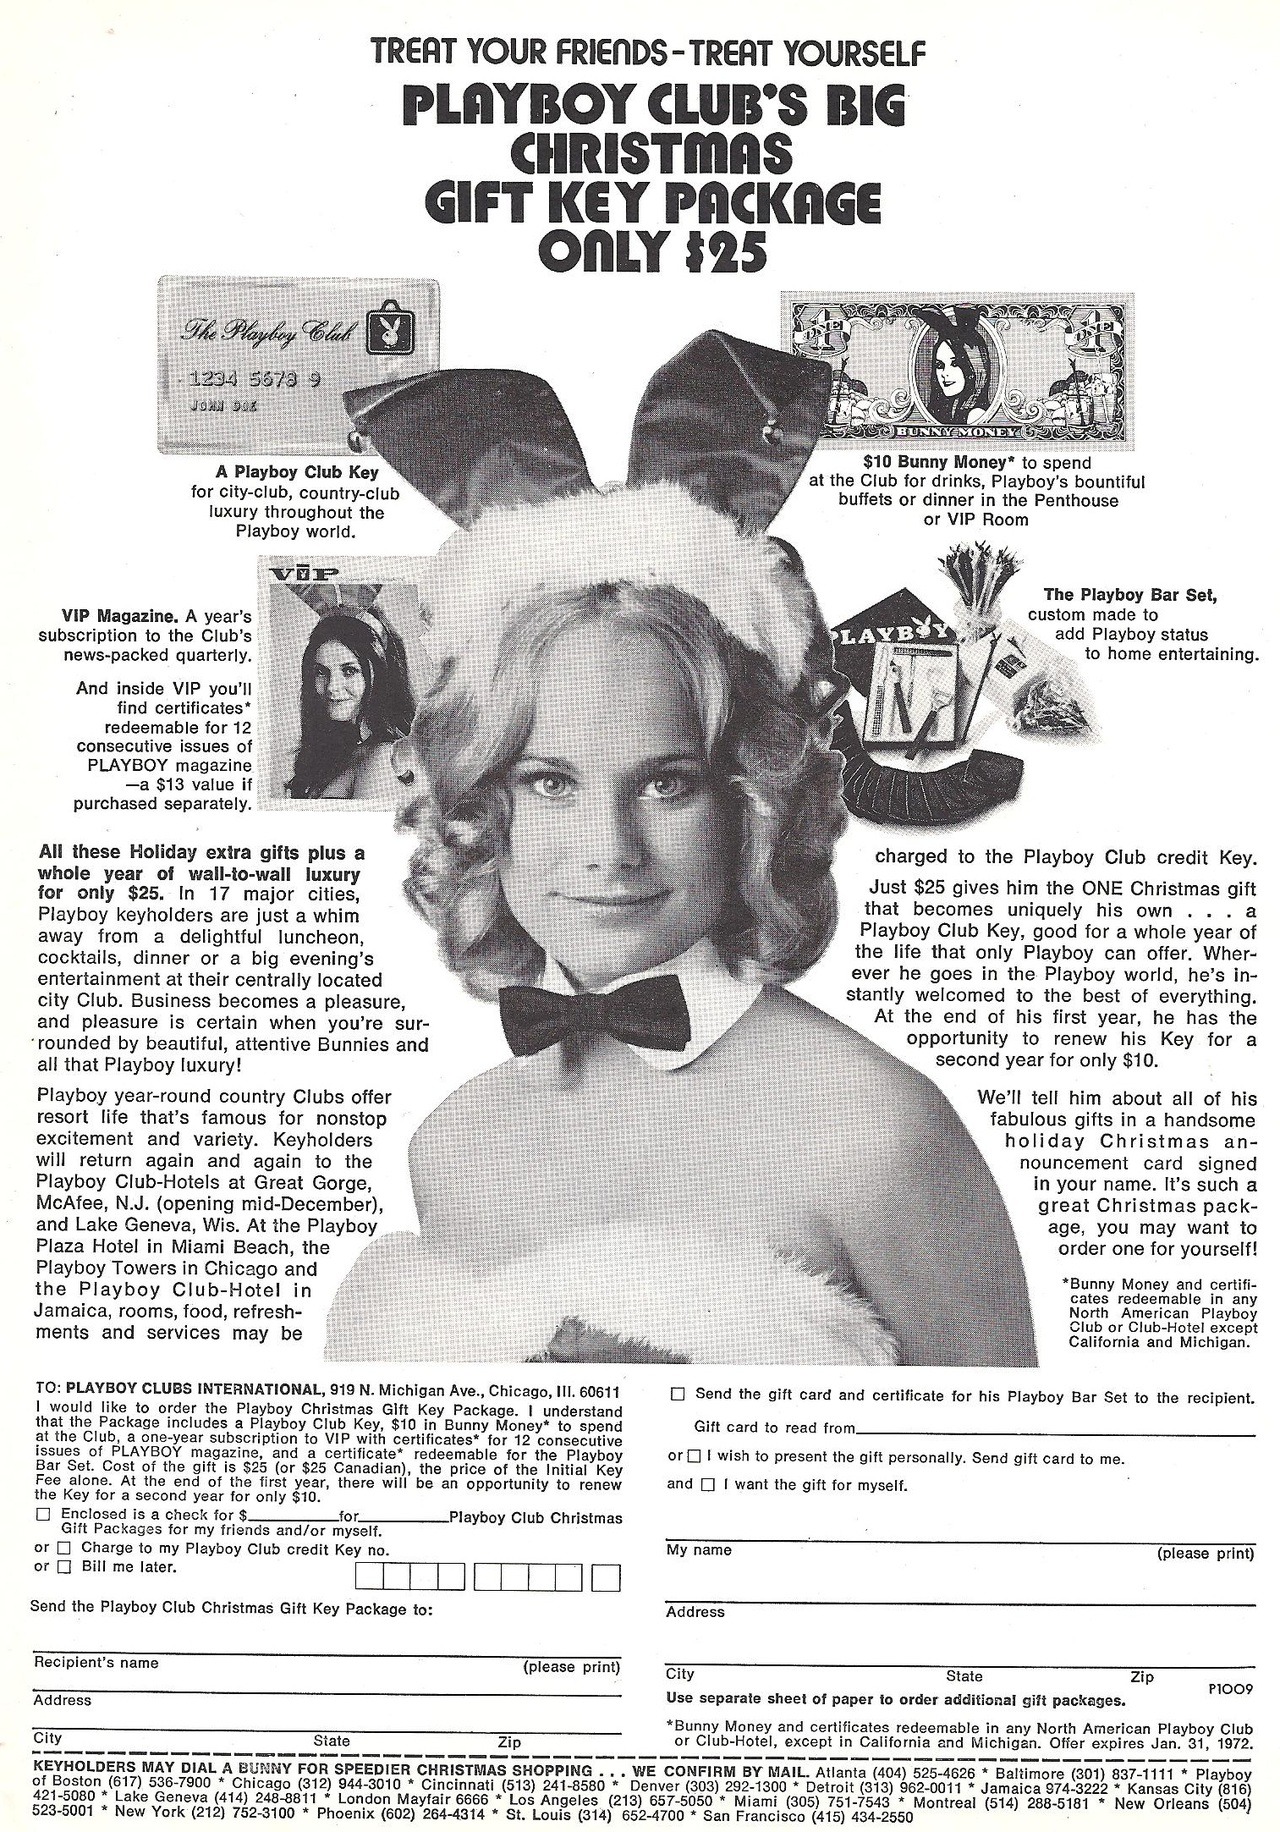 vintagebounty:  Playboy Club’s Big Christmas Gift Key Package - “Treat Yourself”